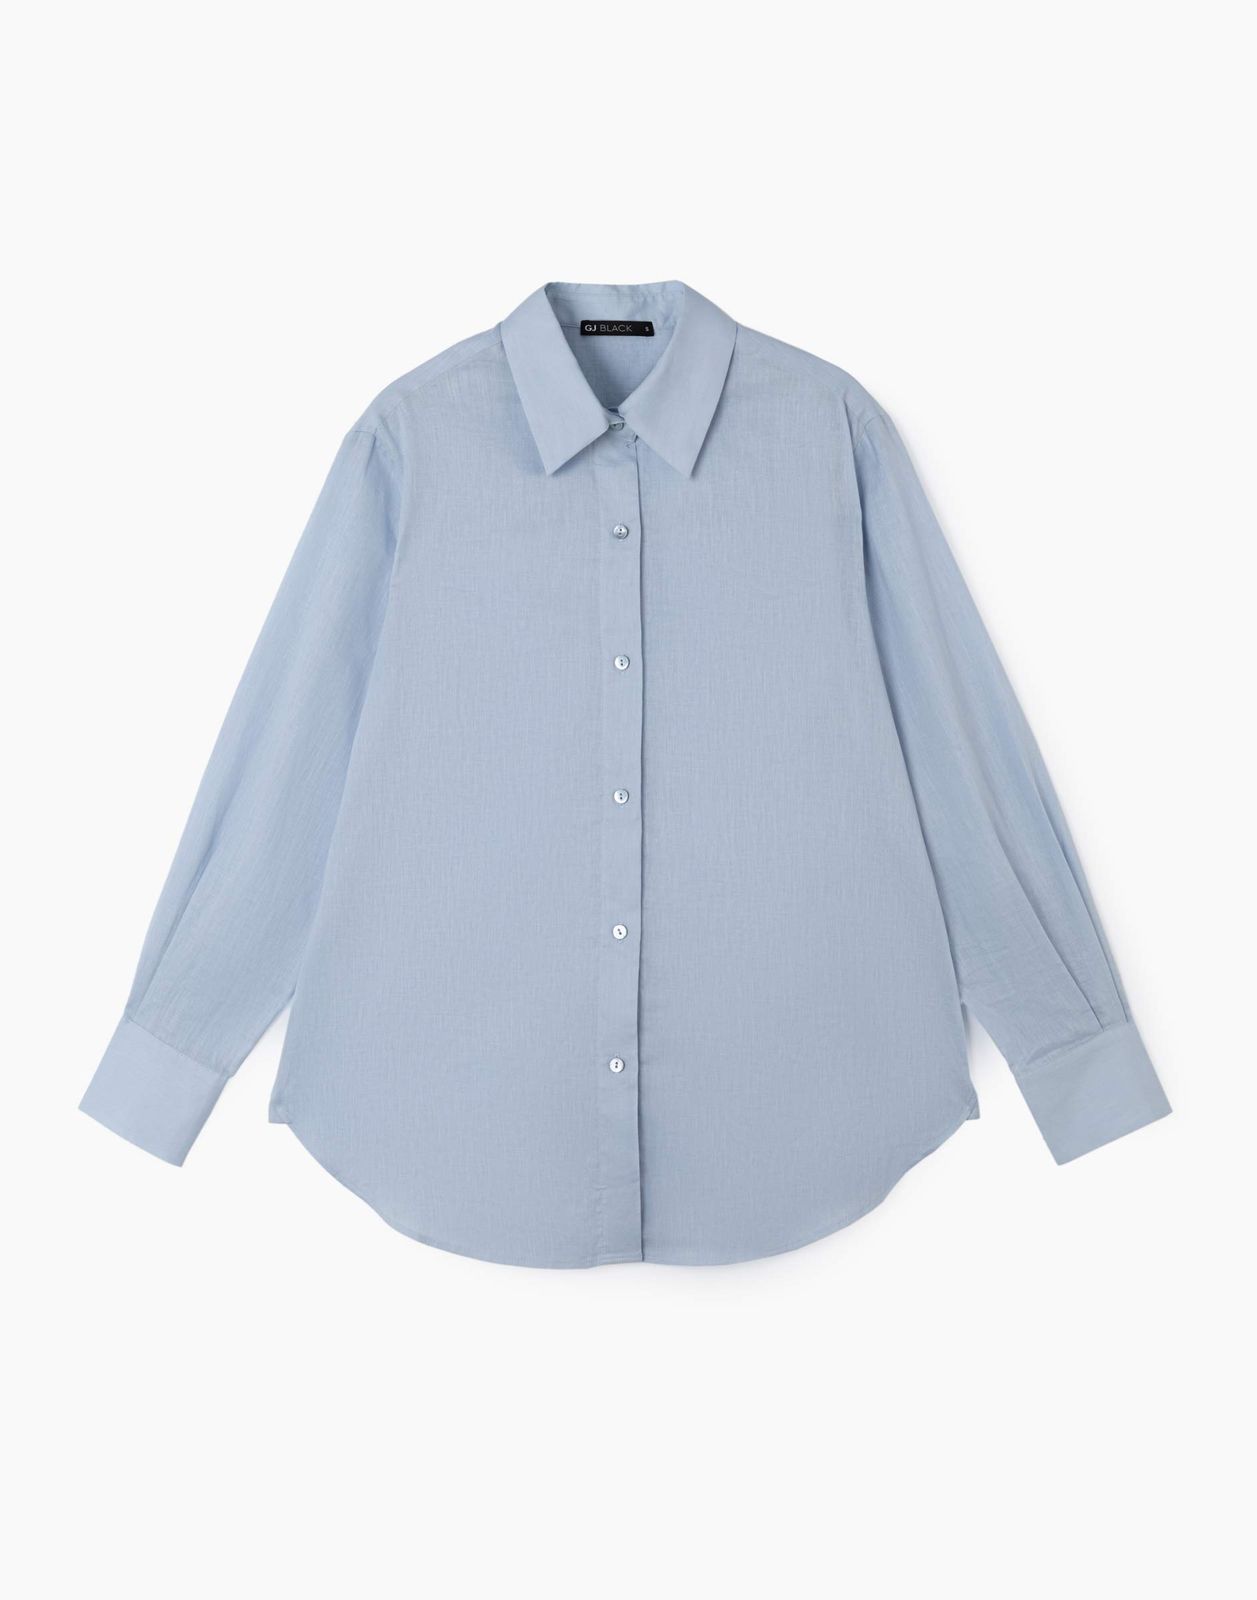 Рубашка женская Gloria Jeans GWT003564 голубой XL/170